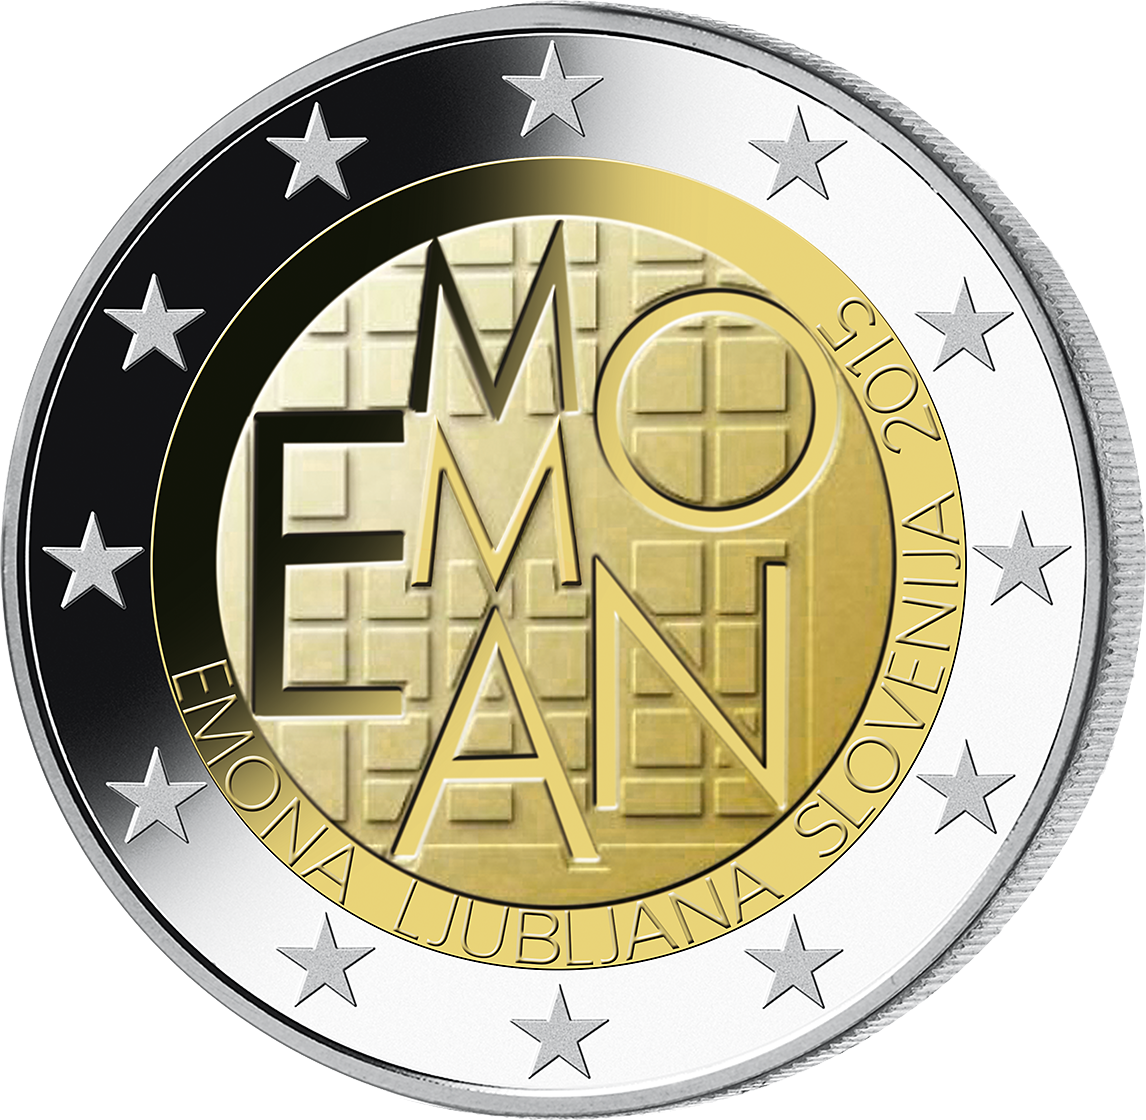 2 Euro Gedenkmünze "Emona Ljubljana" 2015 aus Slowenien